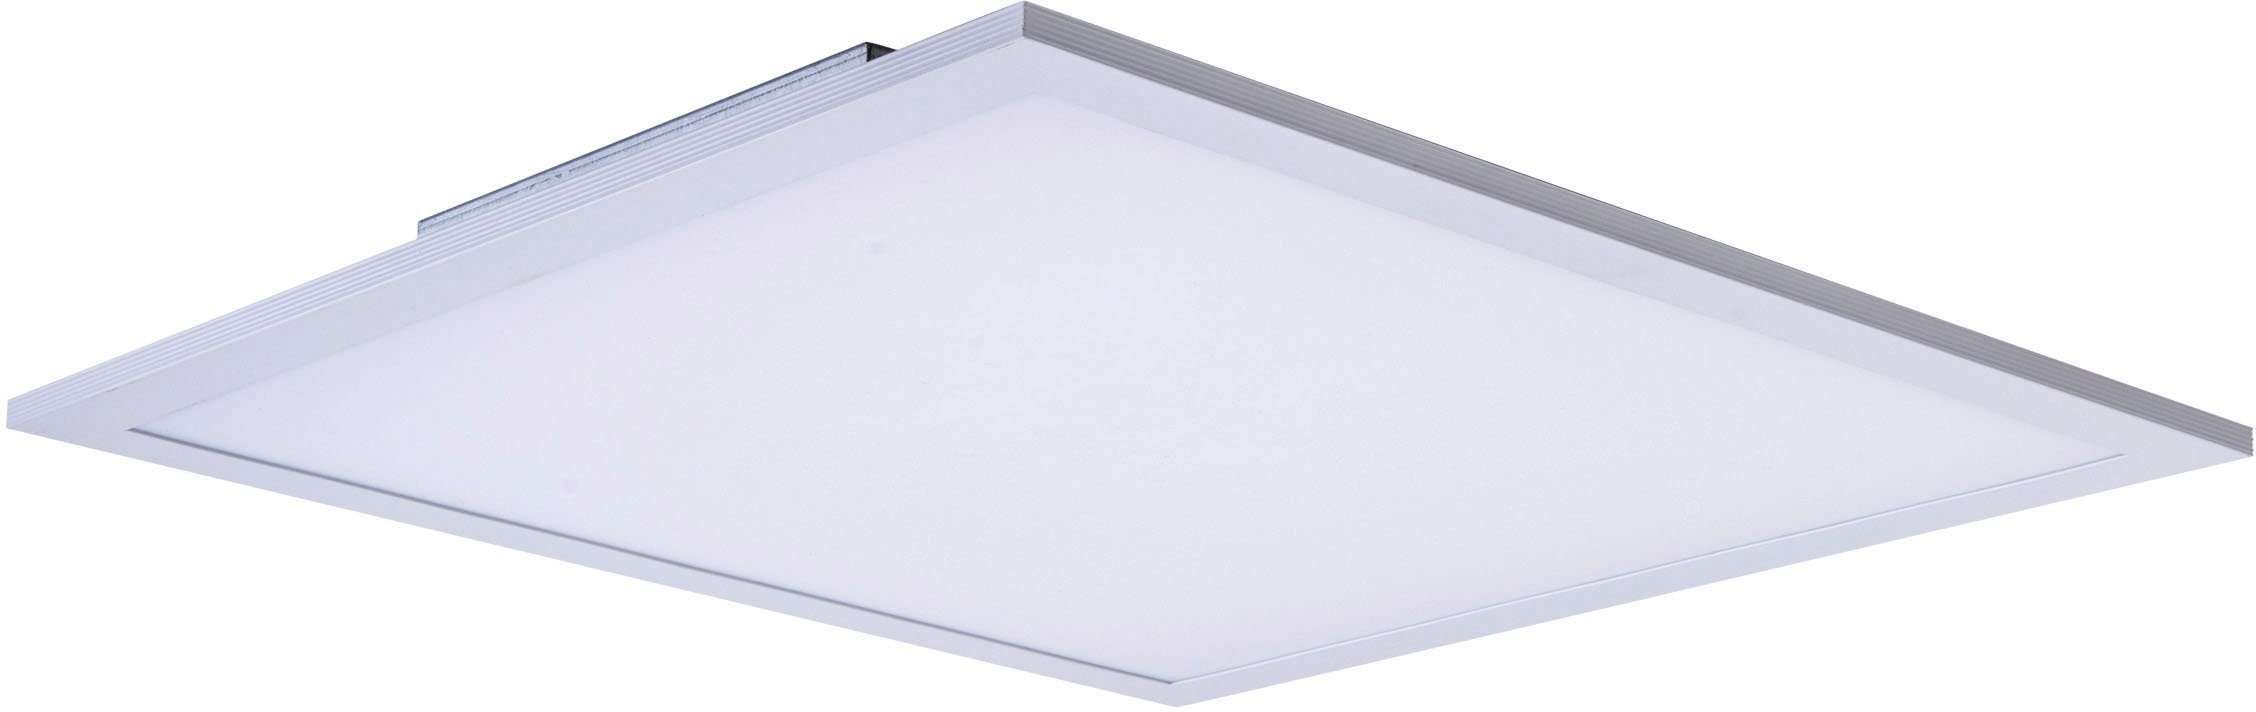 näve LED LED, 45x45cm, Lichtfarbe H: Nicola, weiß 6cm, fest Aufbaupanel neutralweiß integriert, Panel Neutralweiß, LED 120